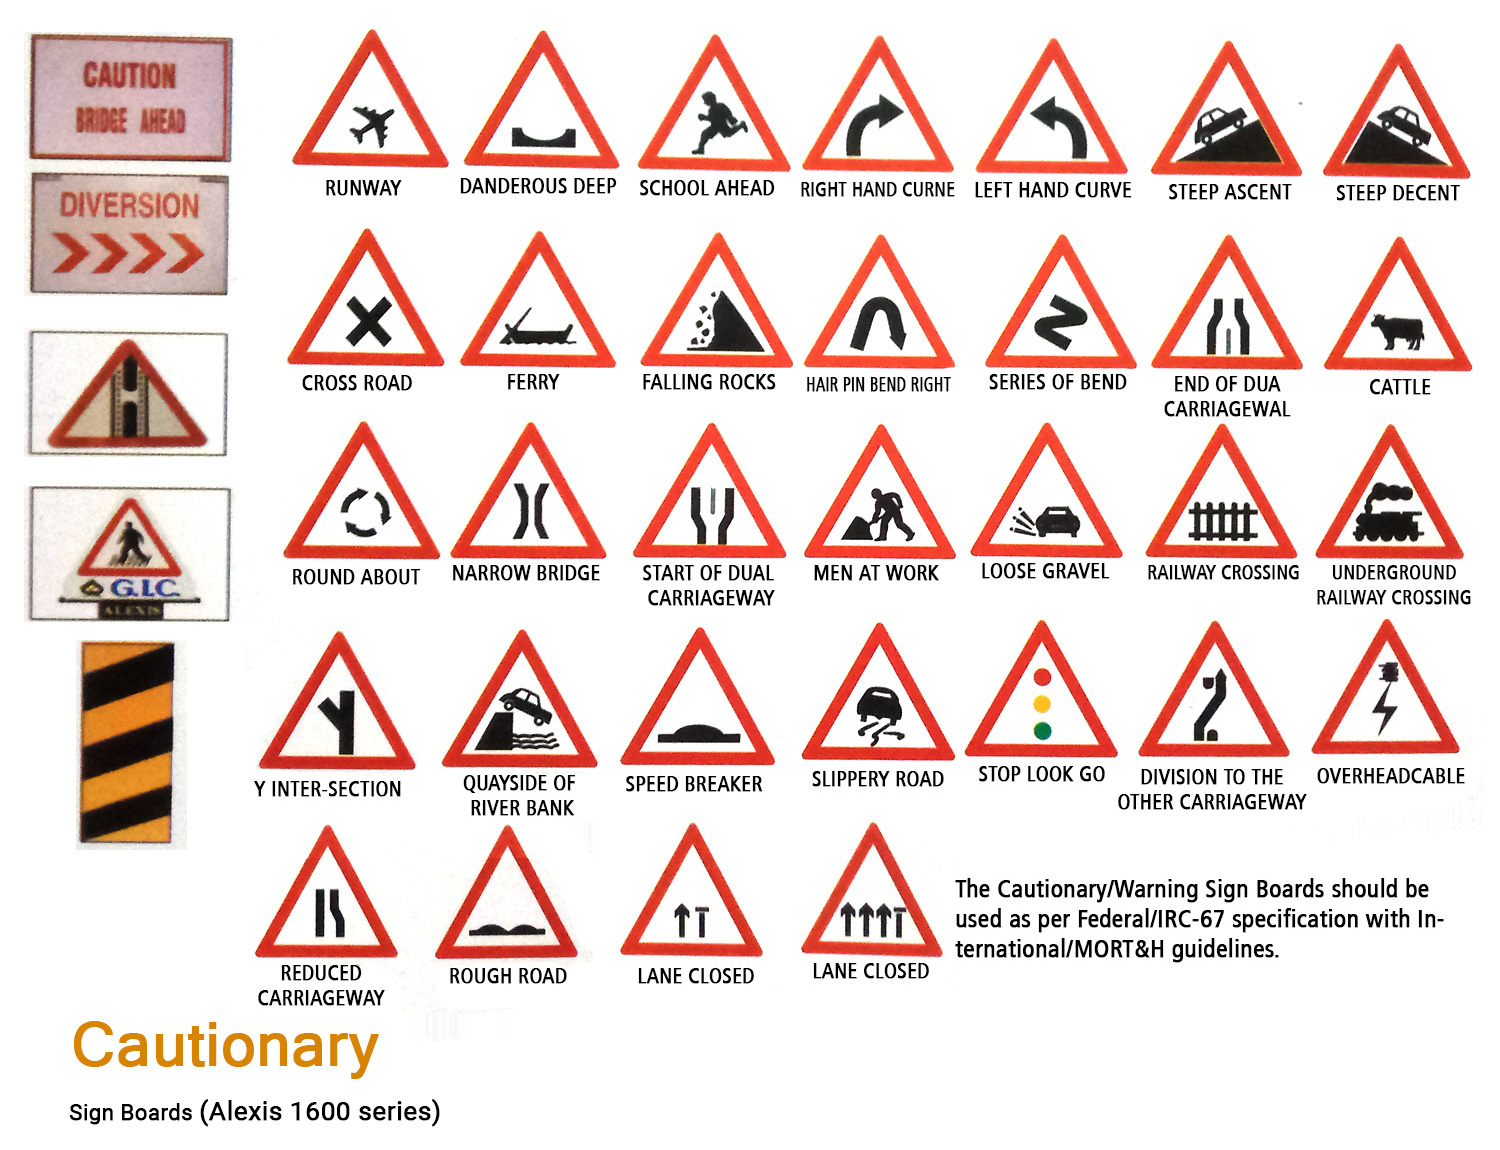 Cautionary/ Warning Signs